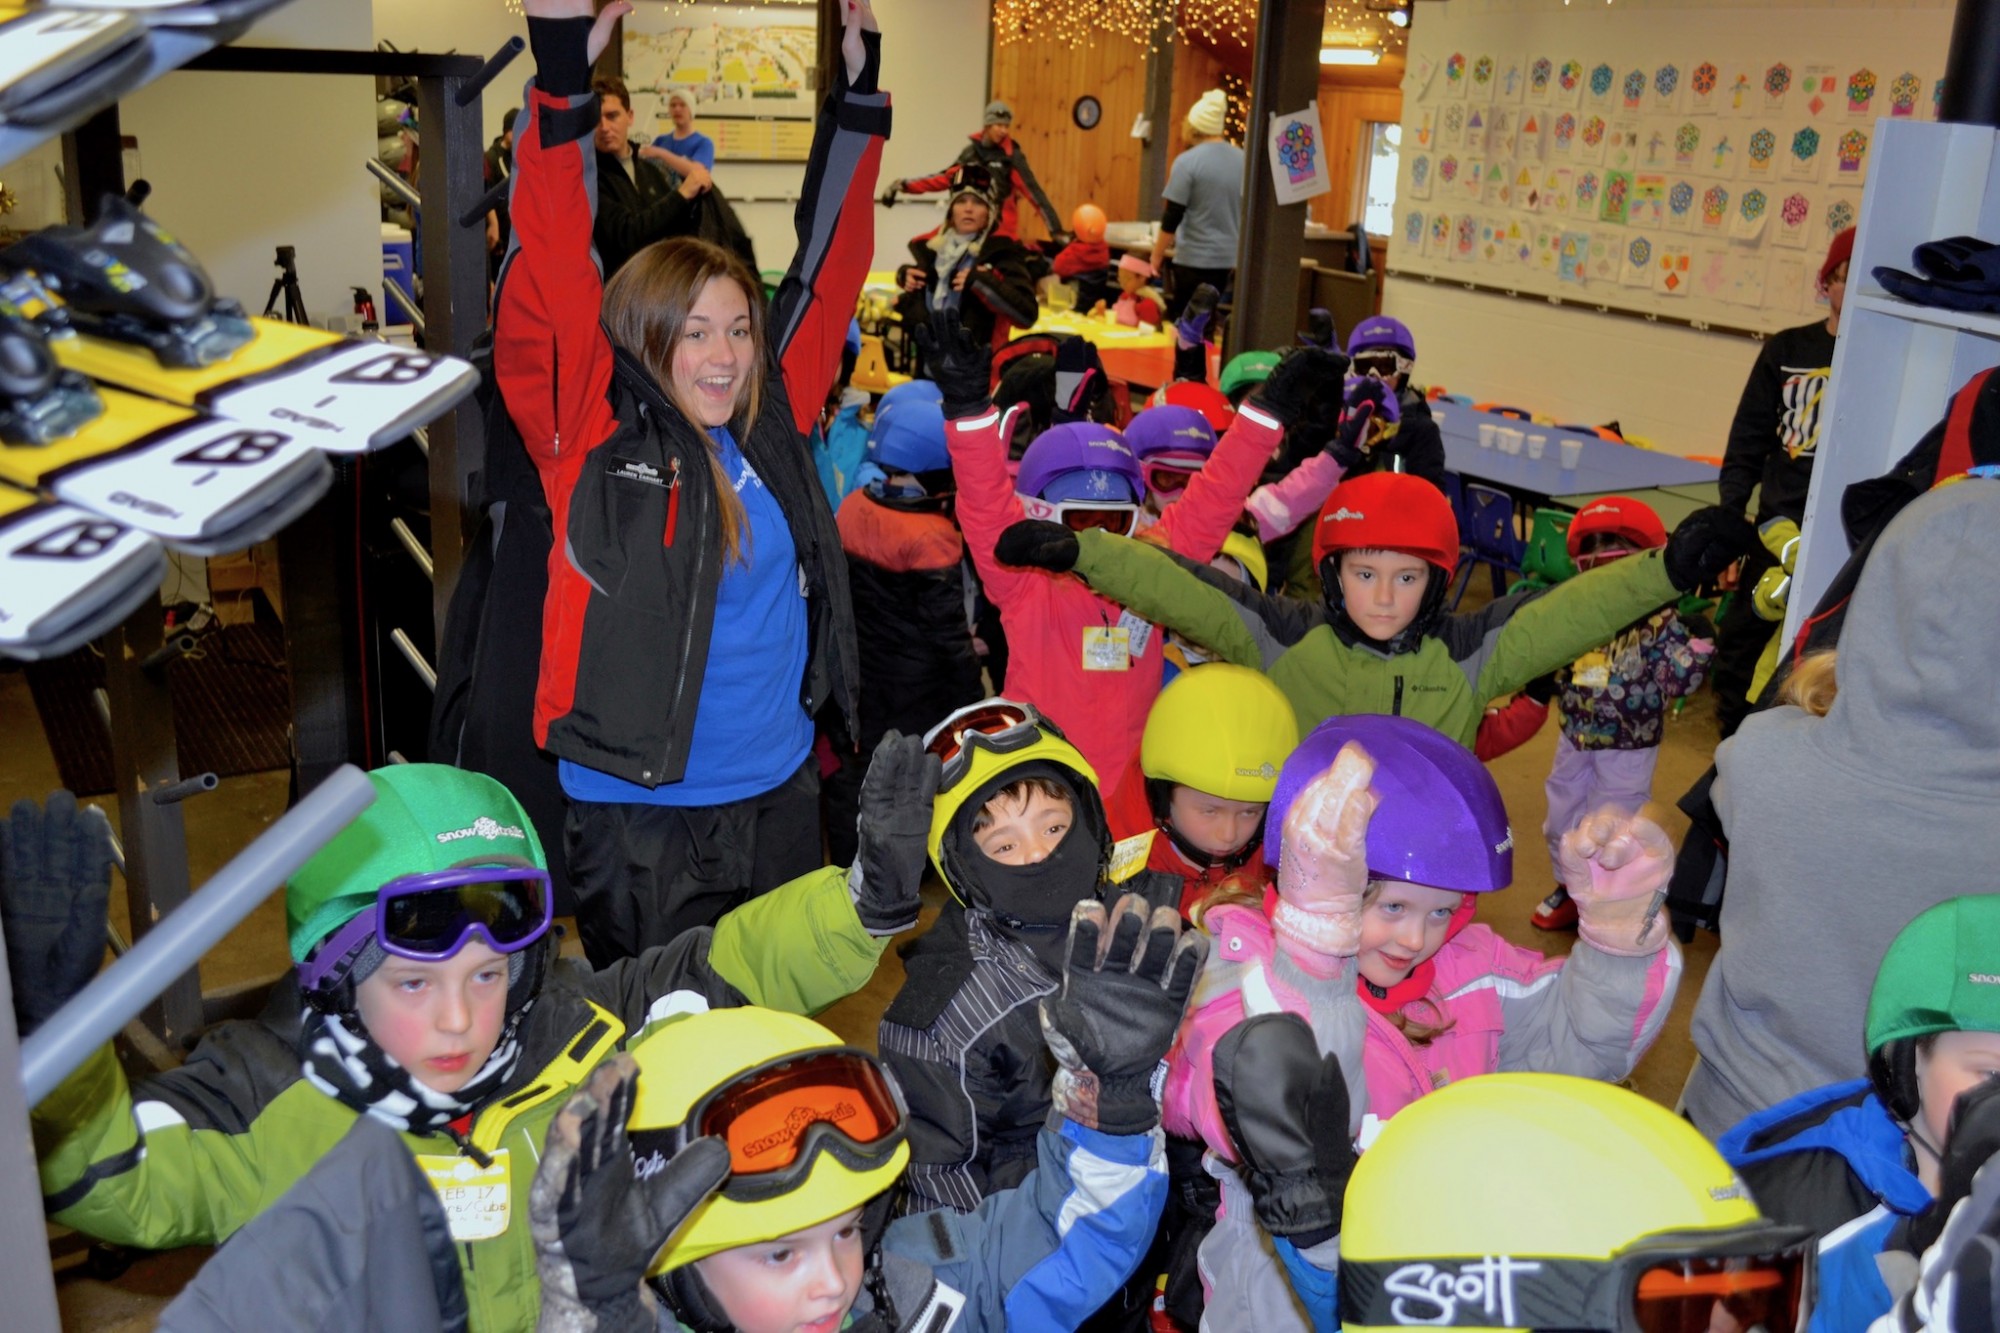 Children's Program at Snow Trails in Mansfield, Ohio